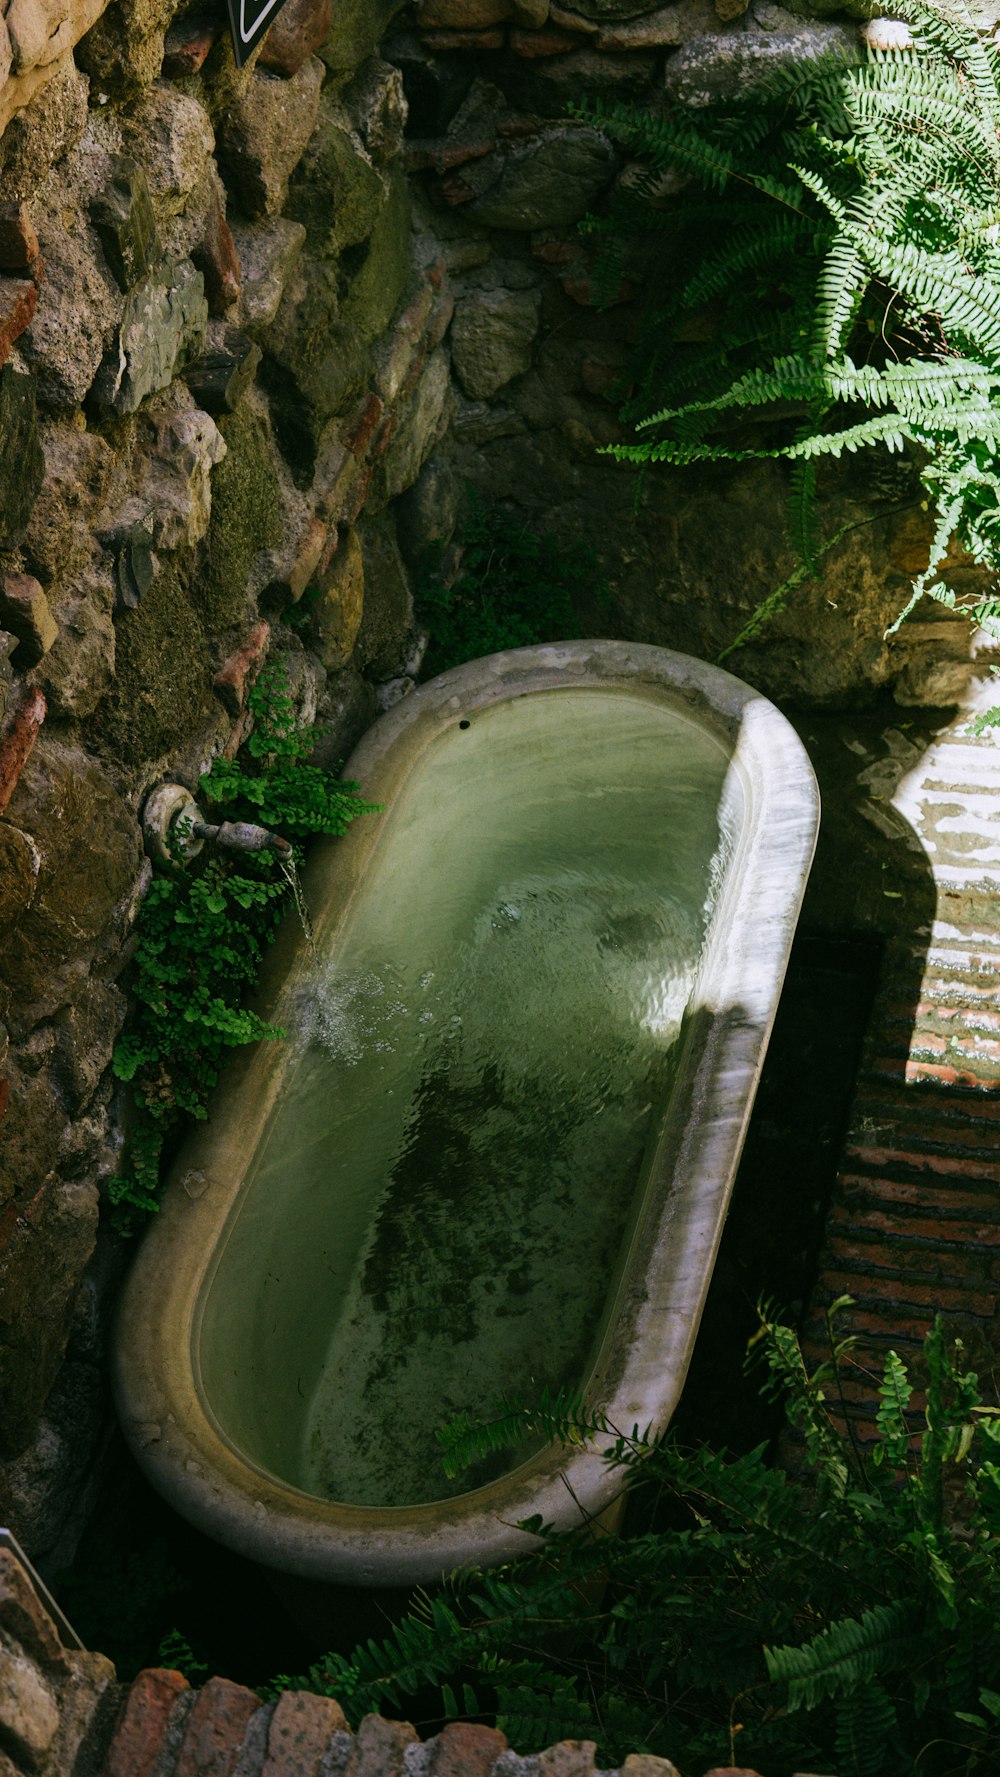 an old bathtub in a stone walled garden